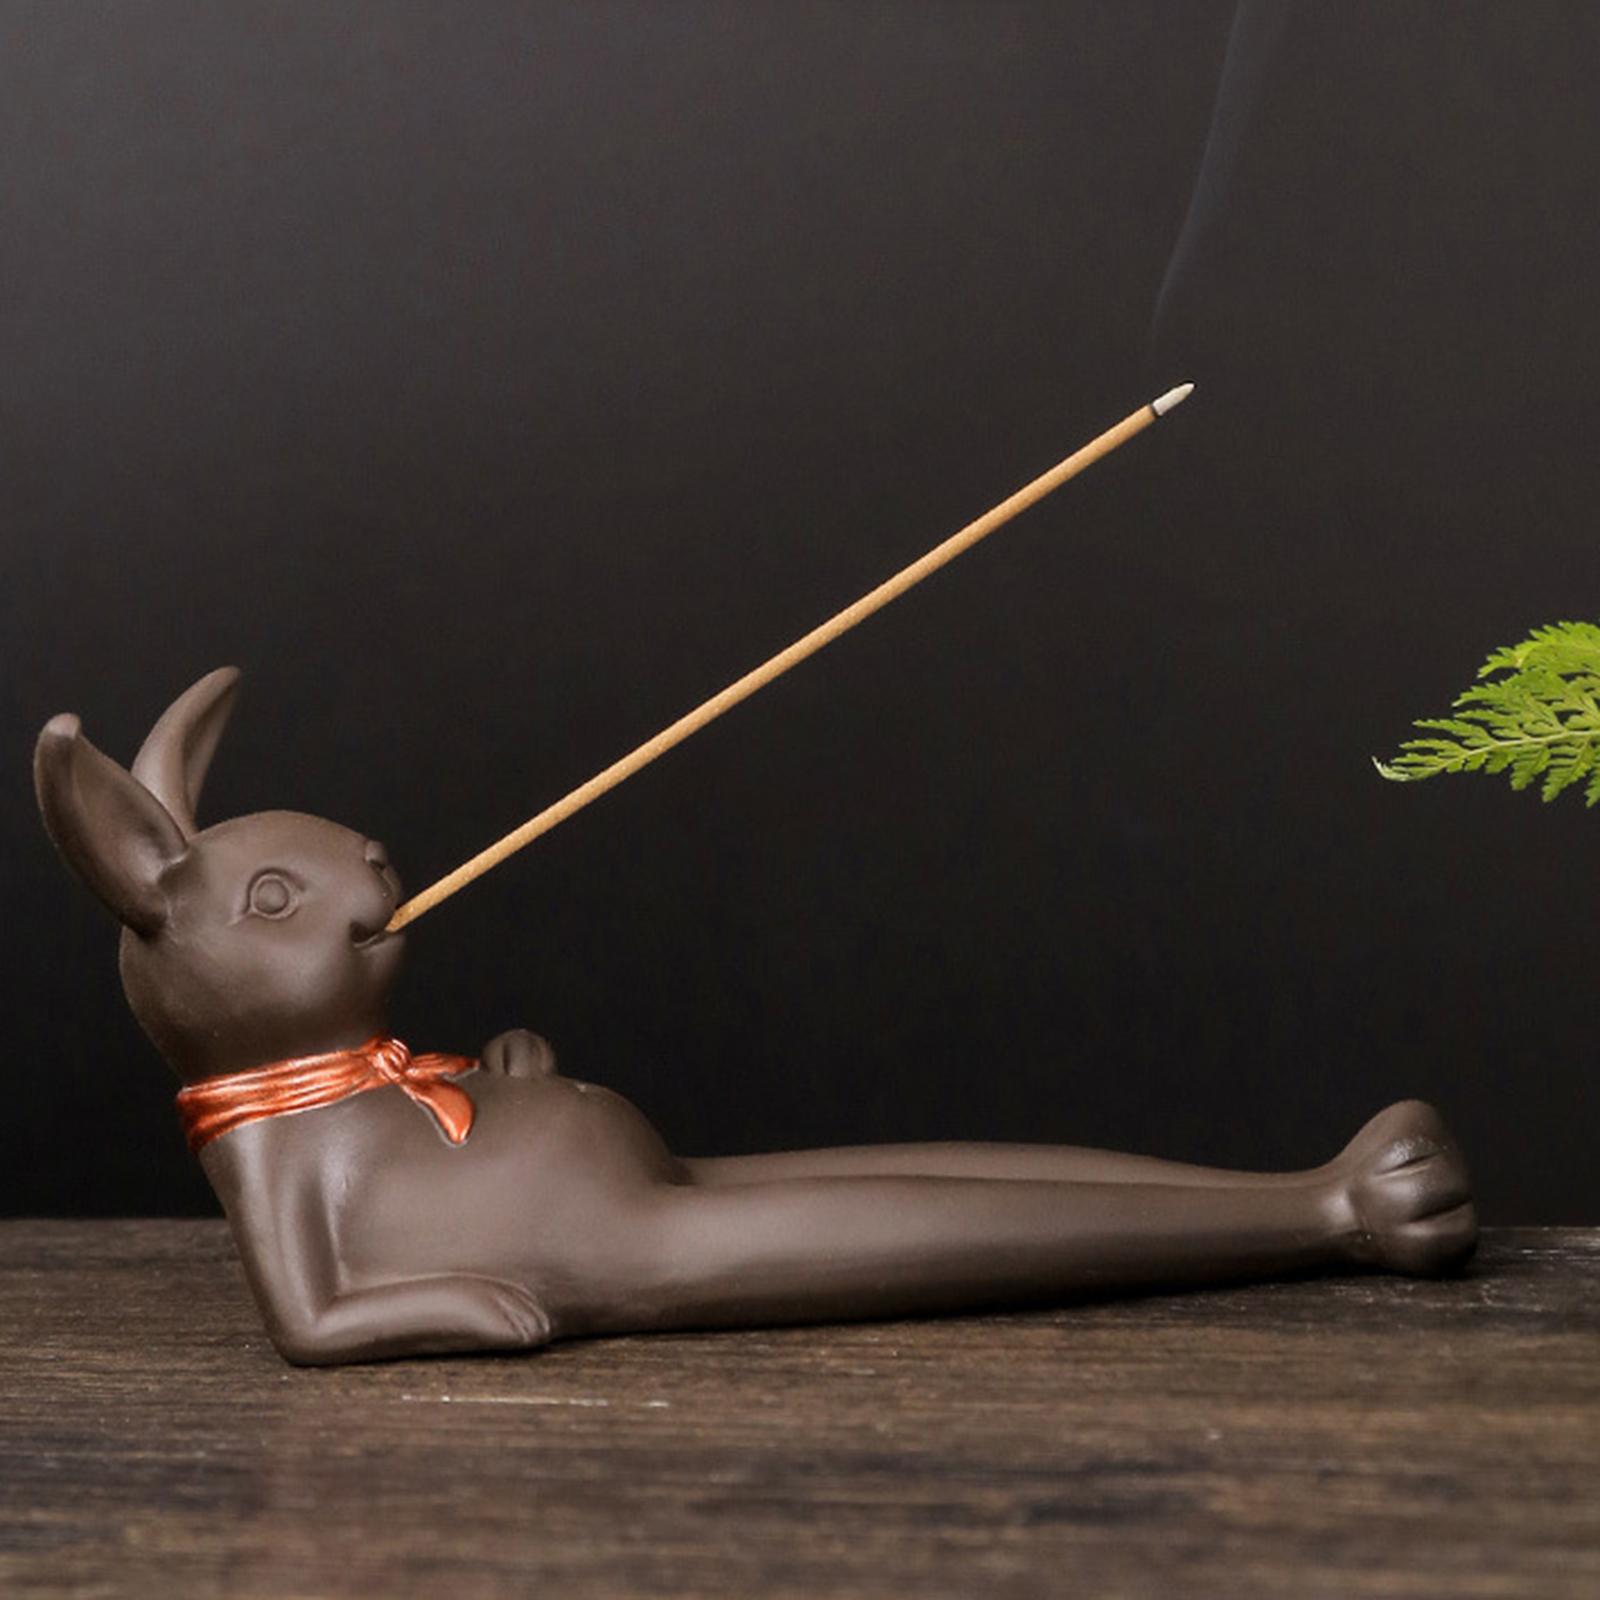 Ceramic Bunny Statue Incense Holder for Home Decor Housewarming Gift